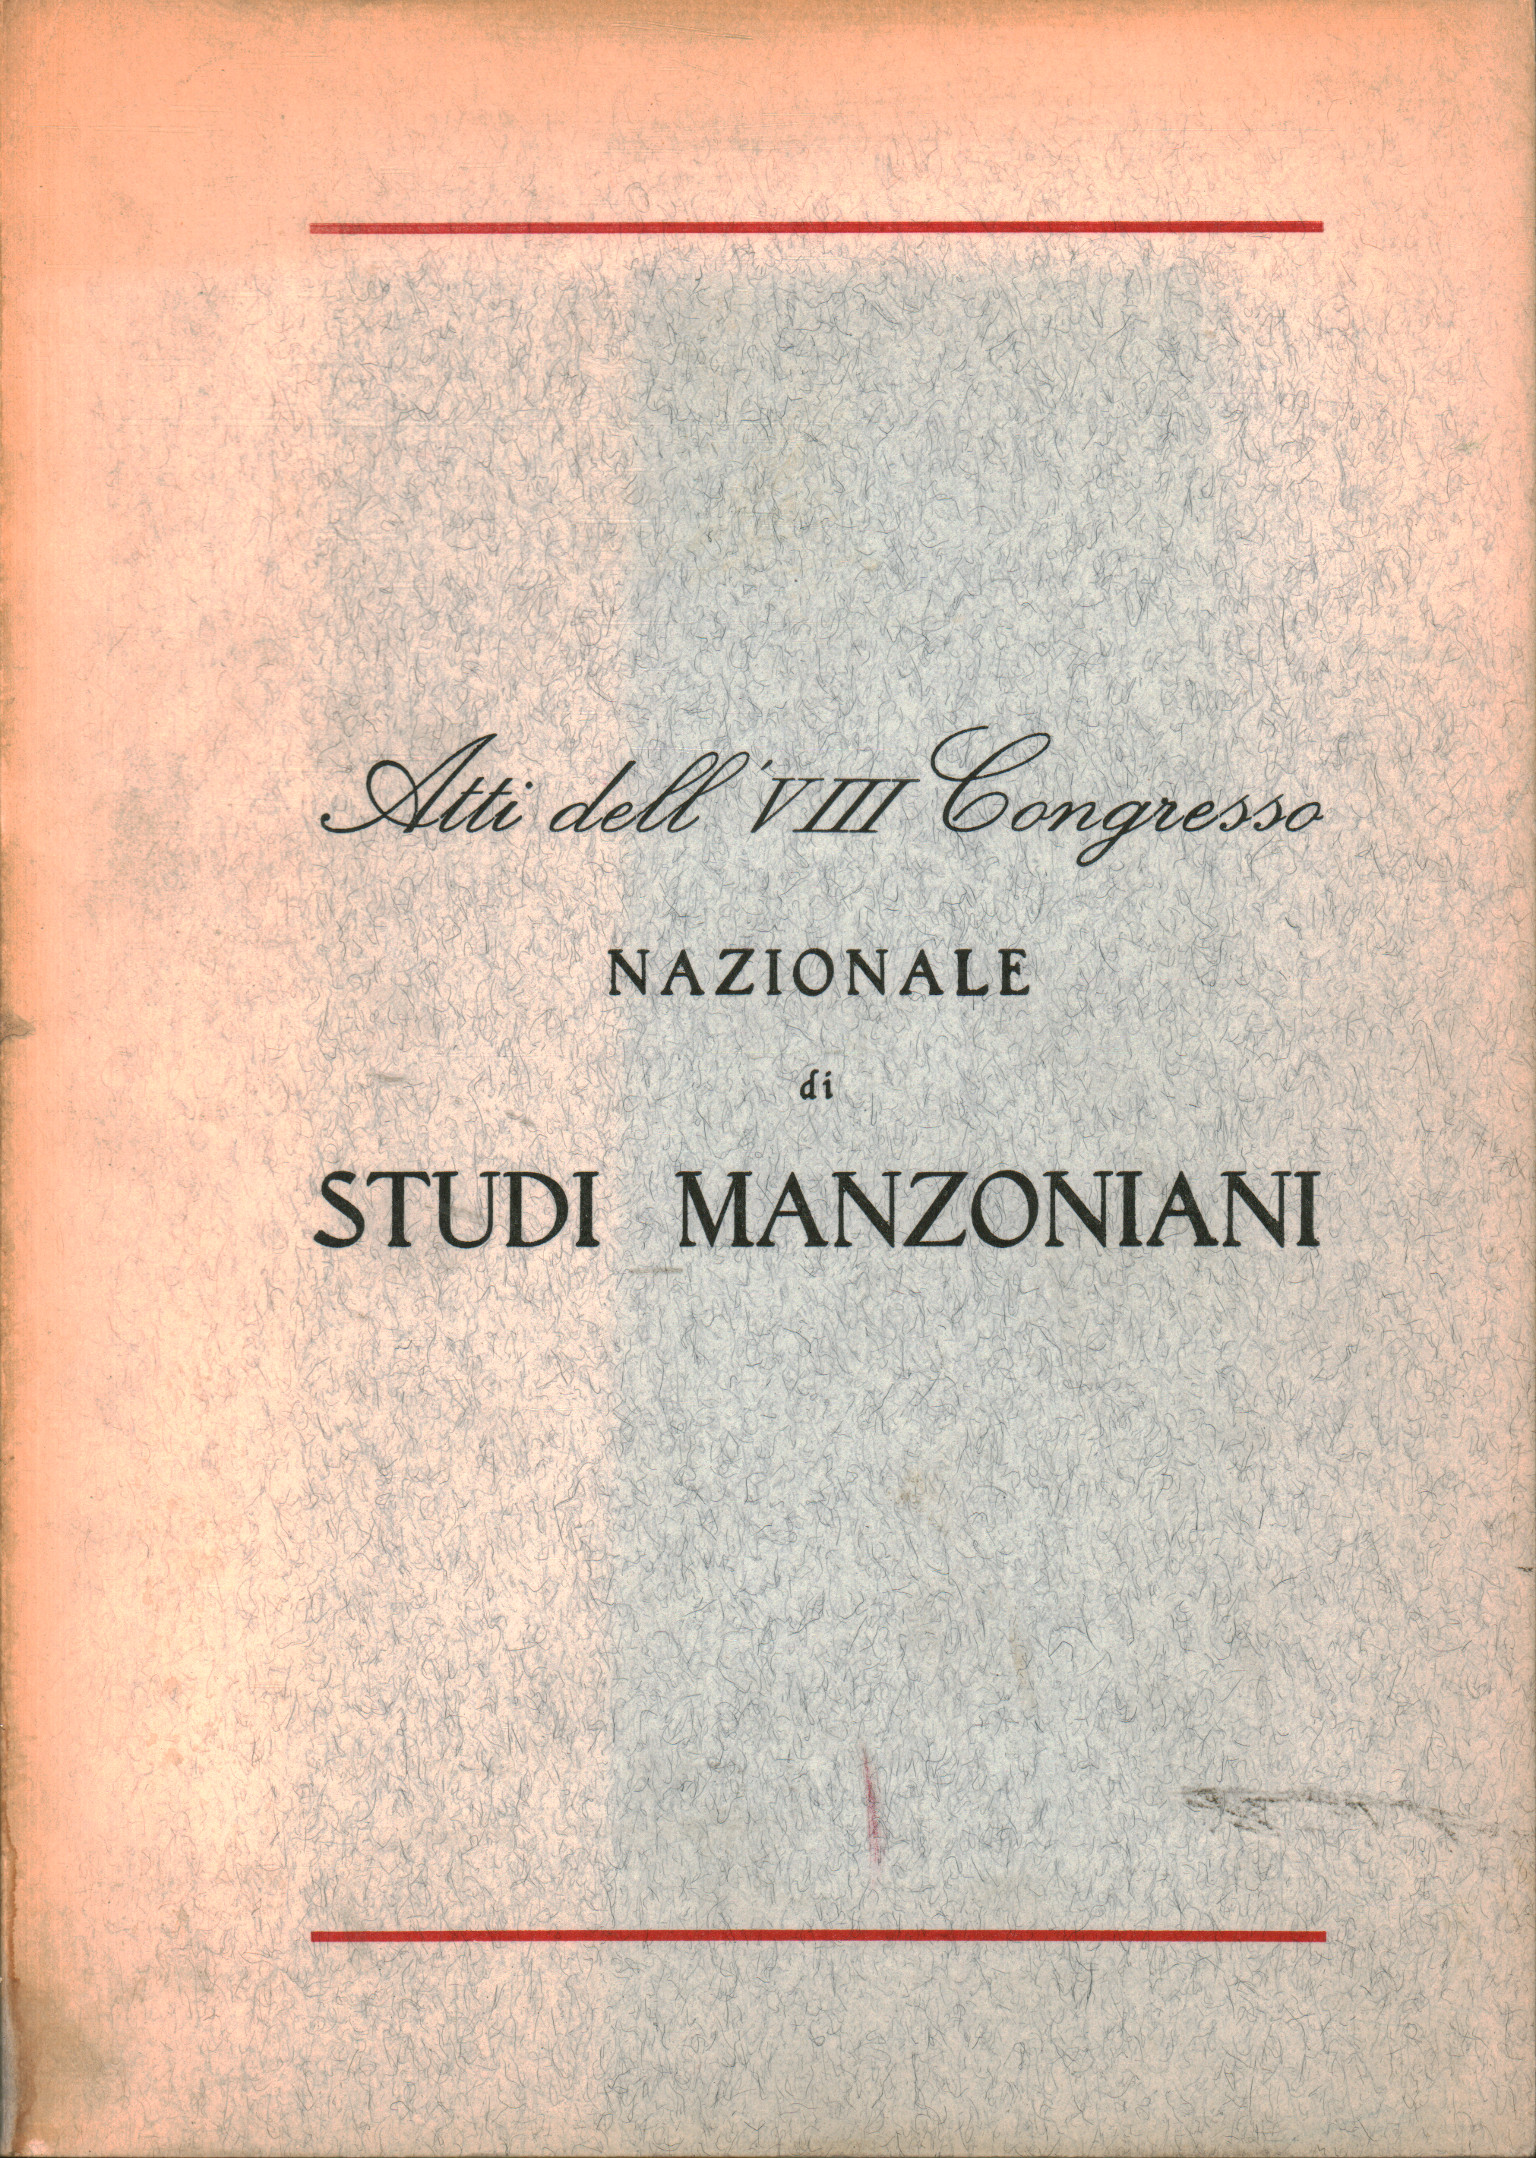 Proceedings of the VIII National Congress of studies Manzon, AA.VV